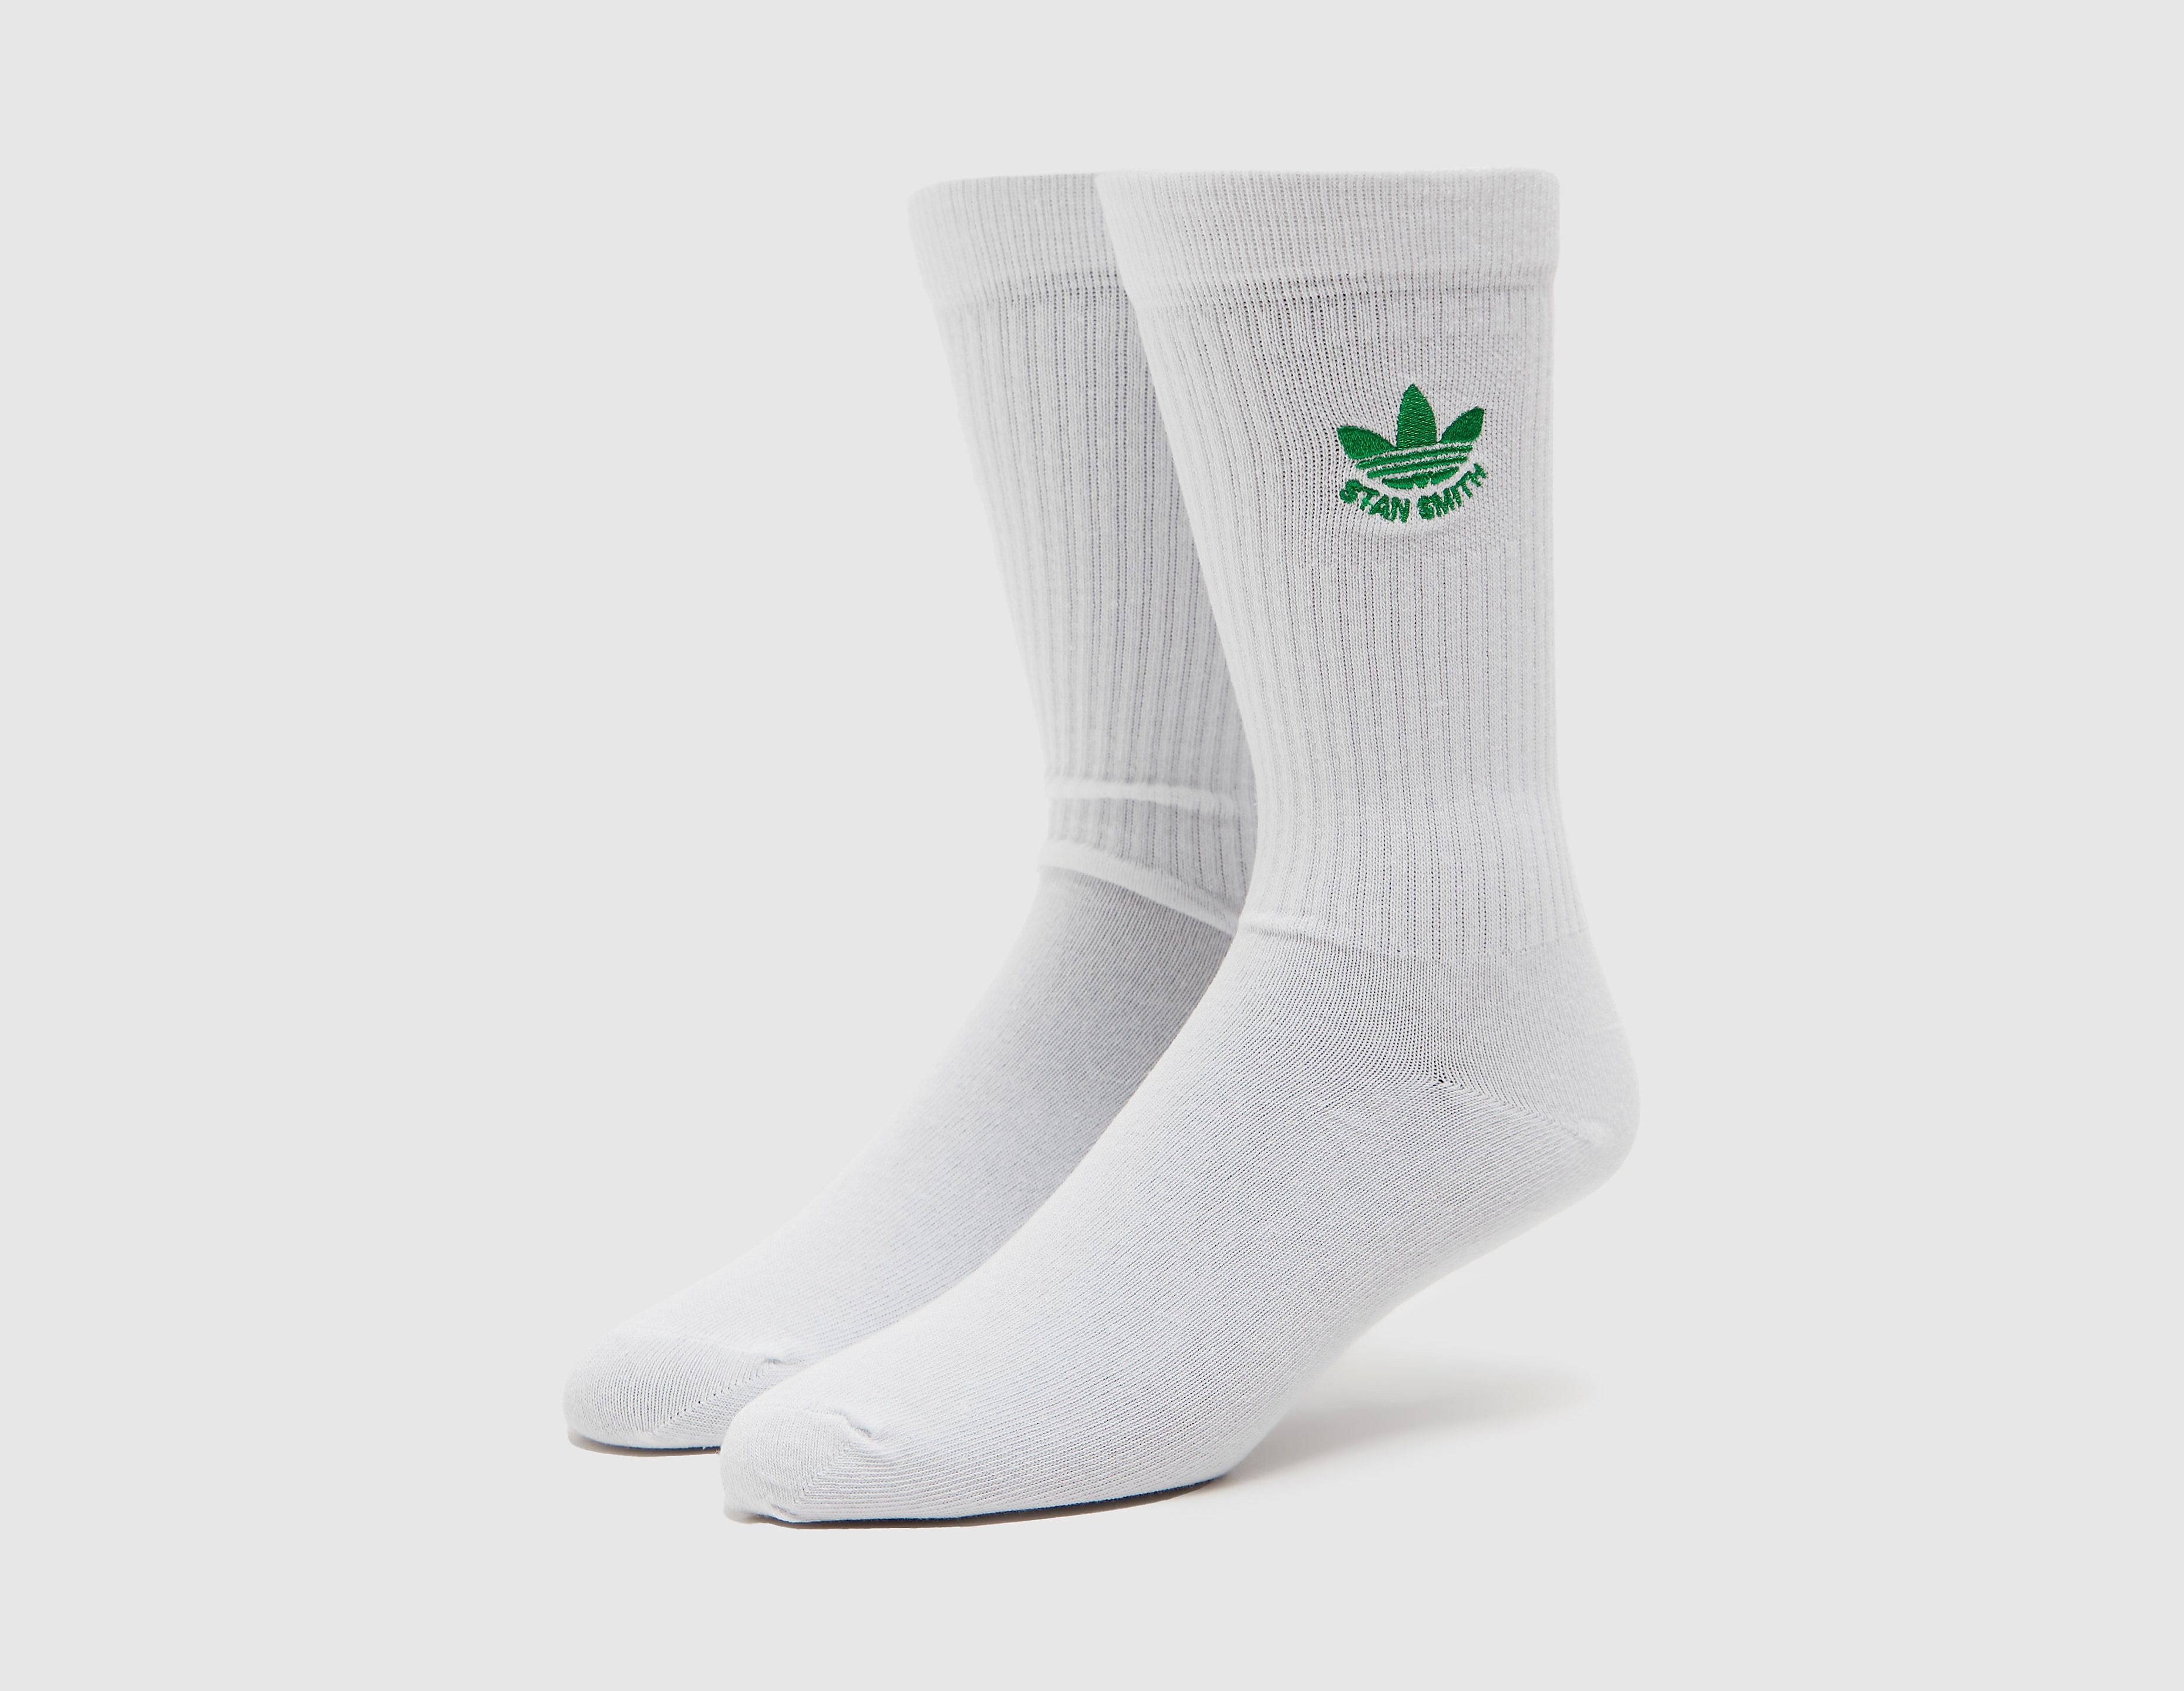 Adidas Originals Stan Smith Trefoil Sock